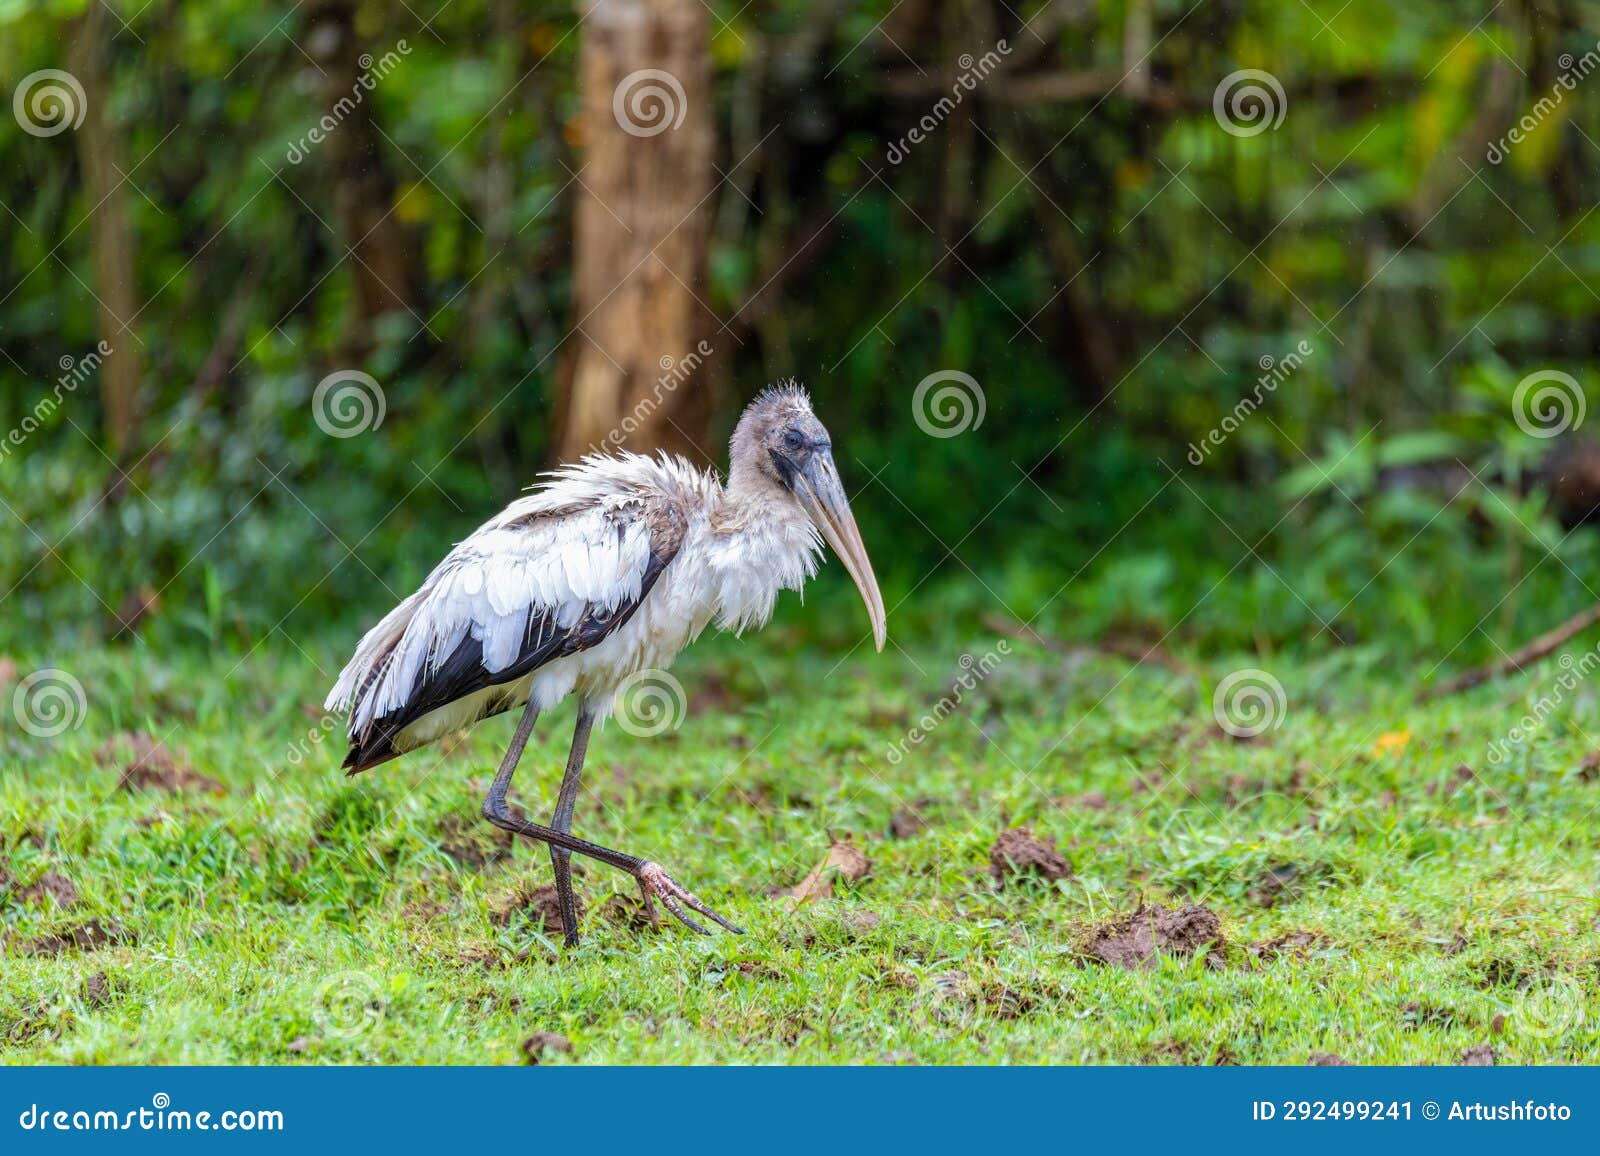 wood stork - mycteria americana. refugio de vida silvestre cano negro, wildlife and bird watching in costa rica